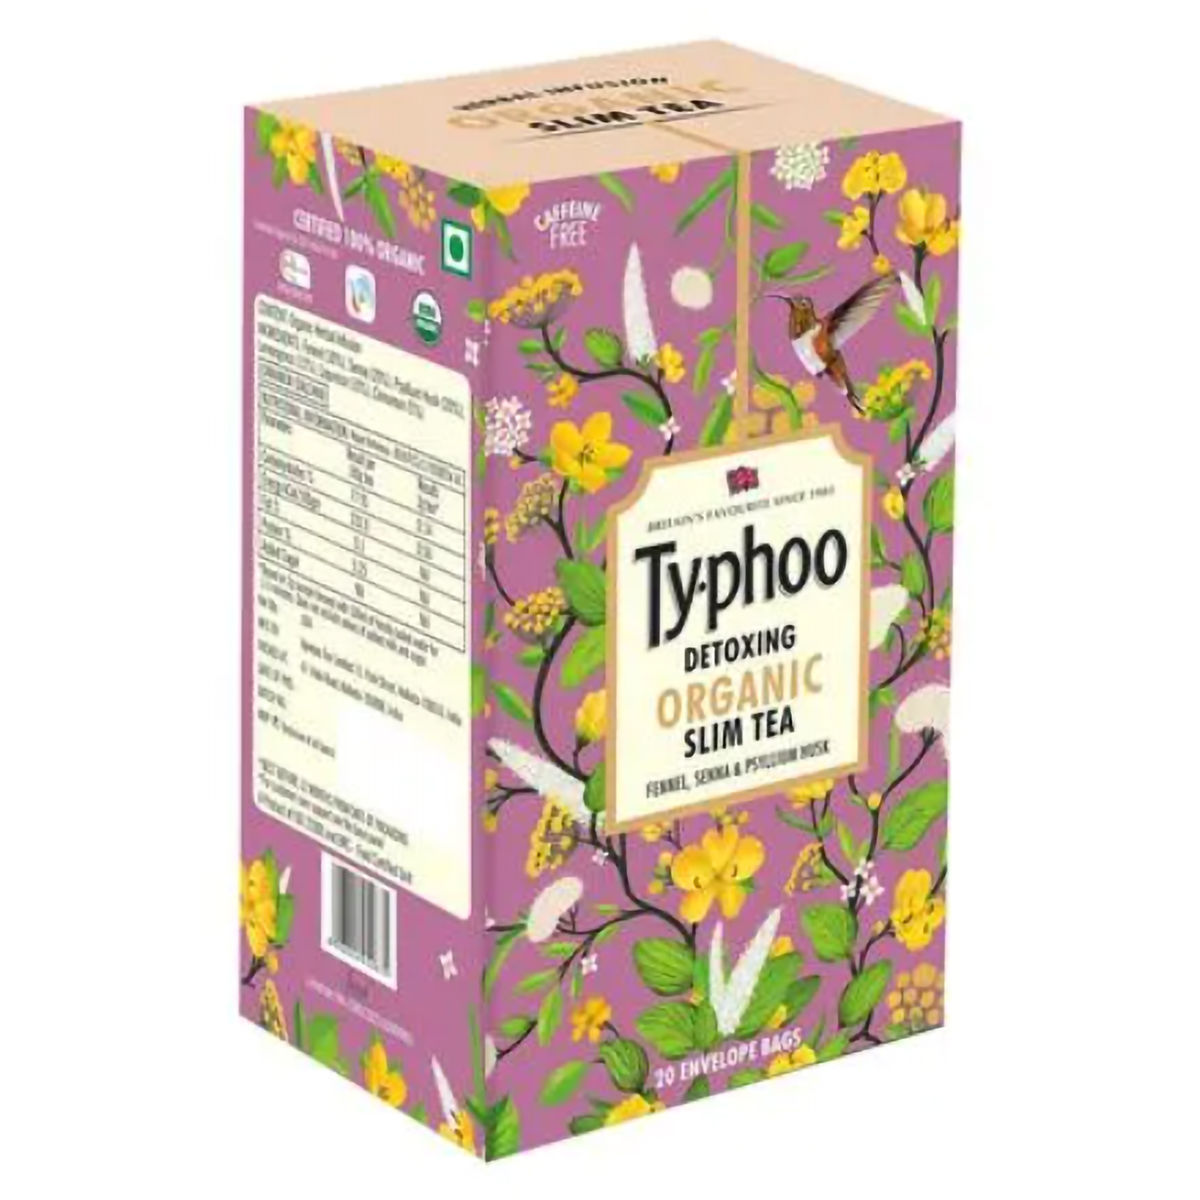 Buy Ty.phoo Detoxing Organic Slim Tea Bags, 20 Count Online